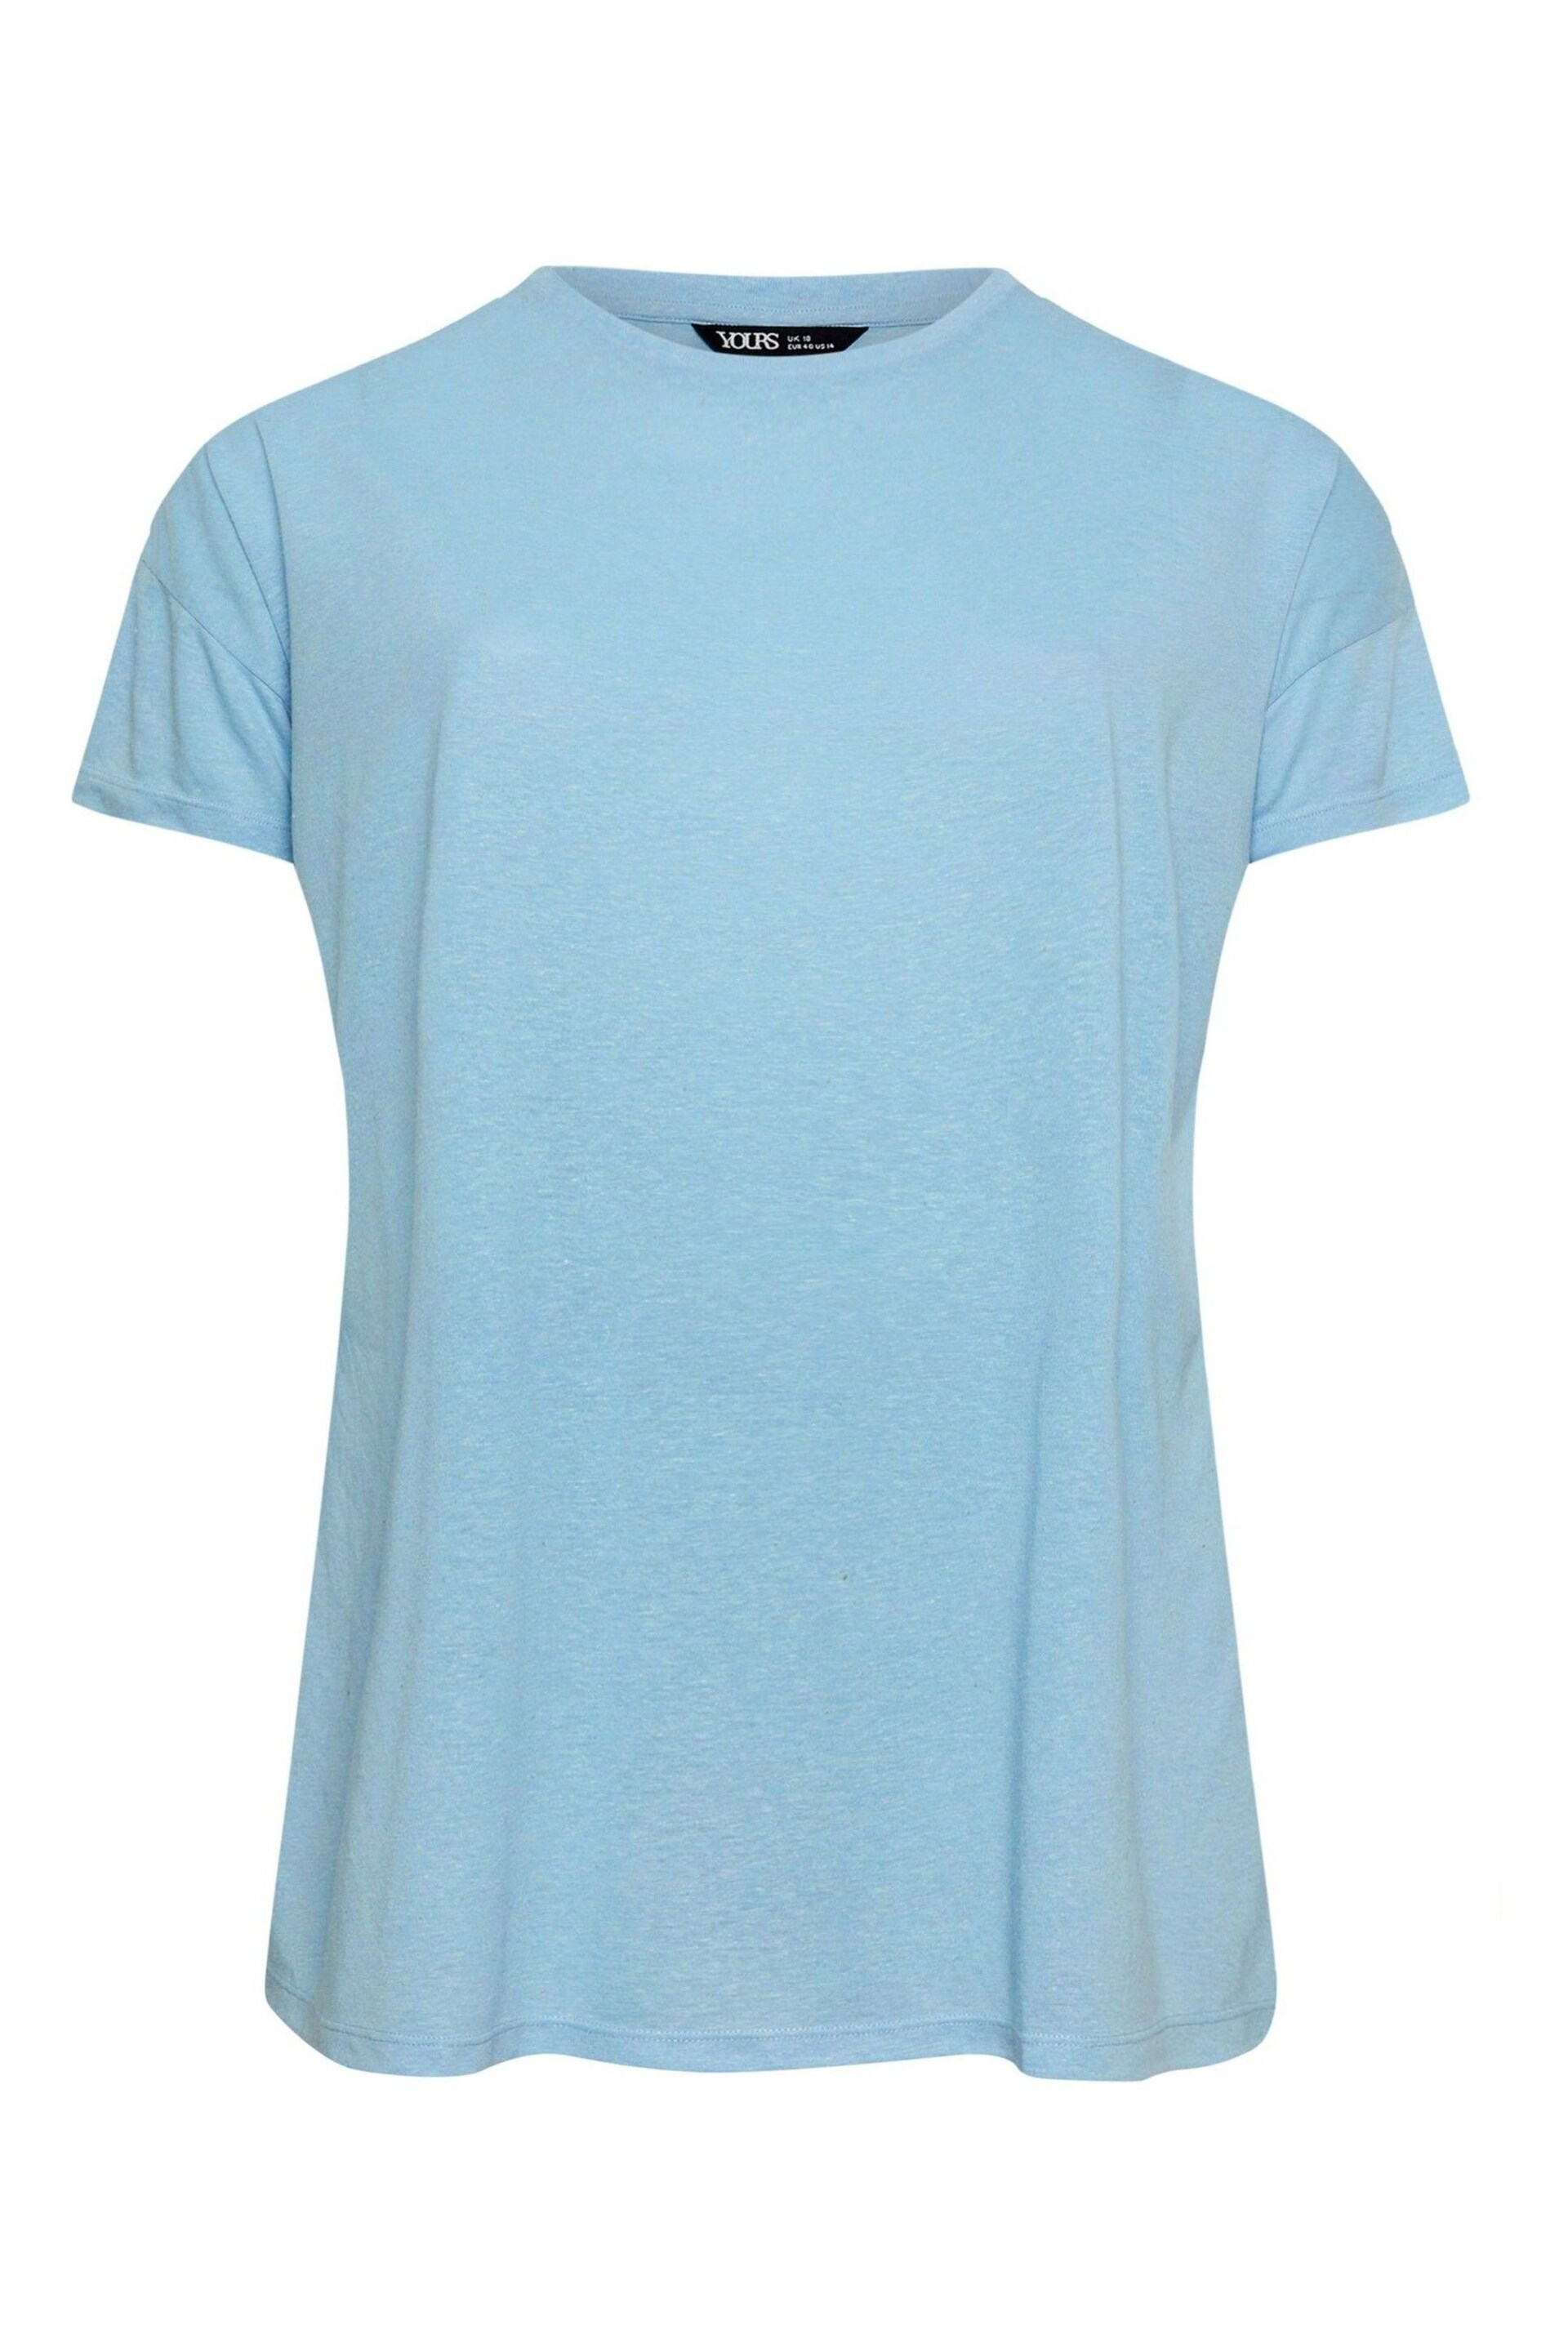 Yours Curve Blue Oversize Side Split Linen Look T-Shirt - Image 5 of 5